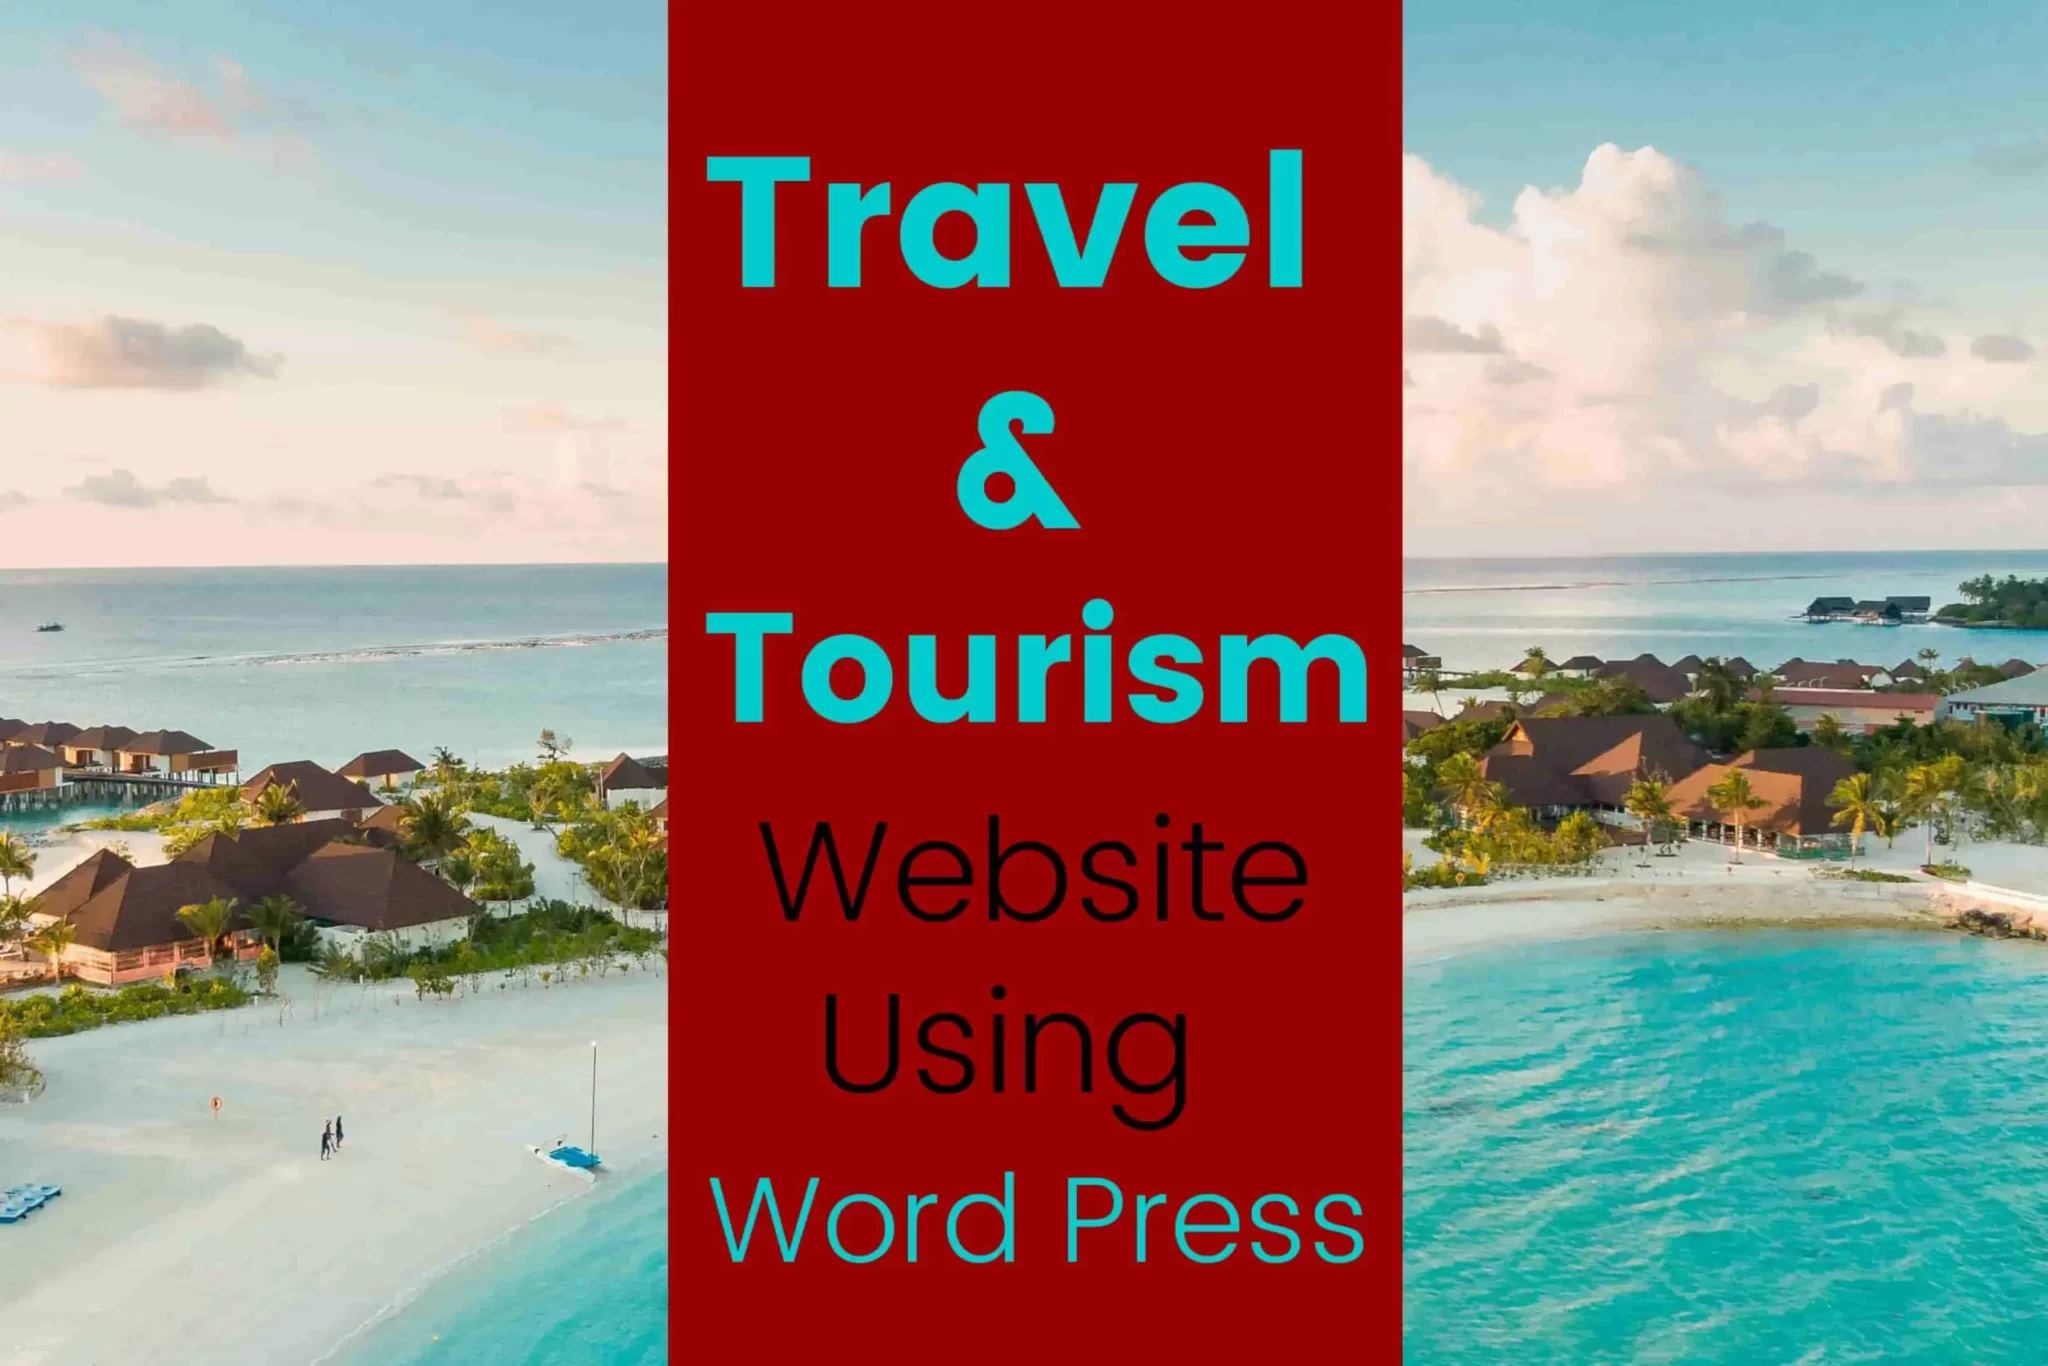 Bhutan Travel & Tourism Website Design and Development Using WordPress